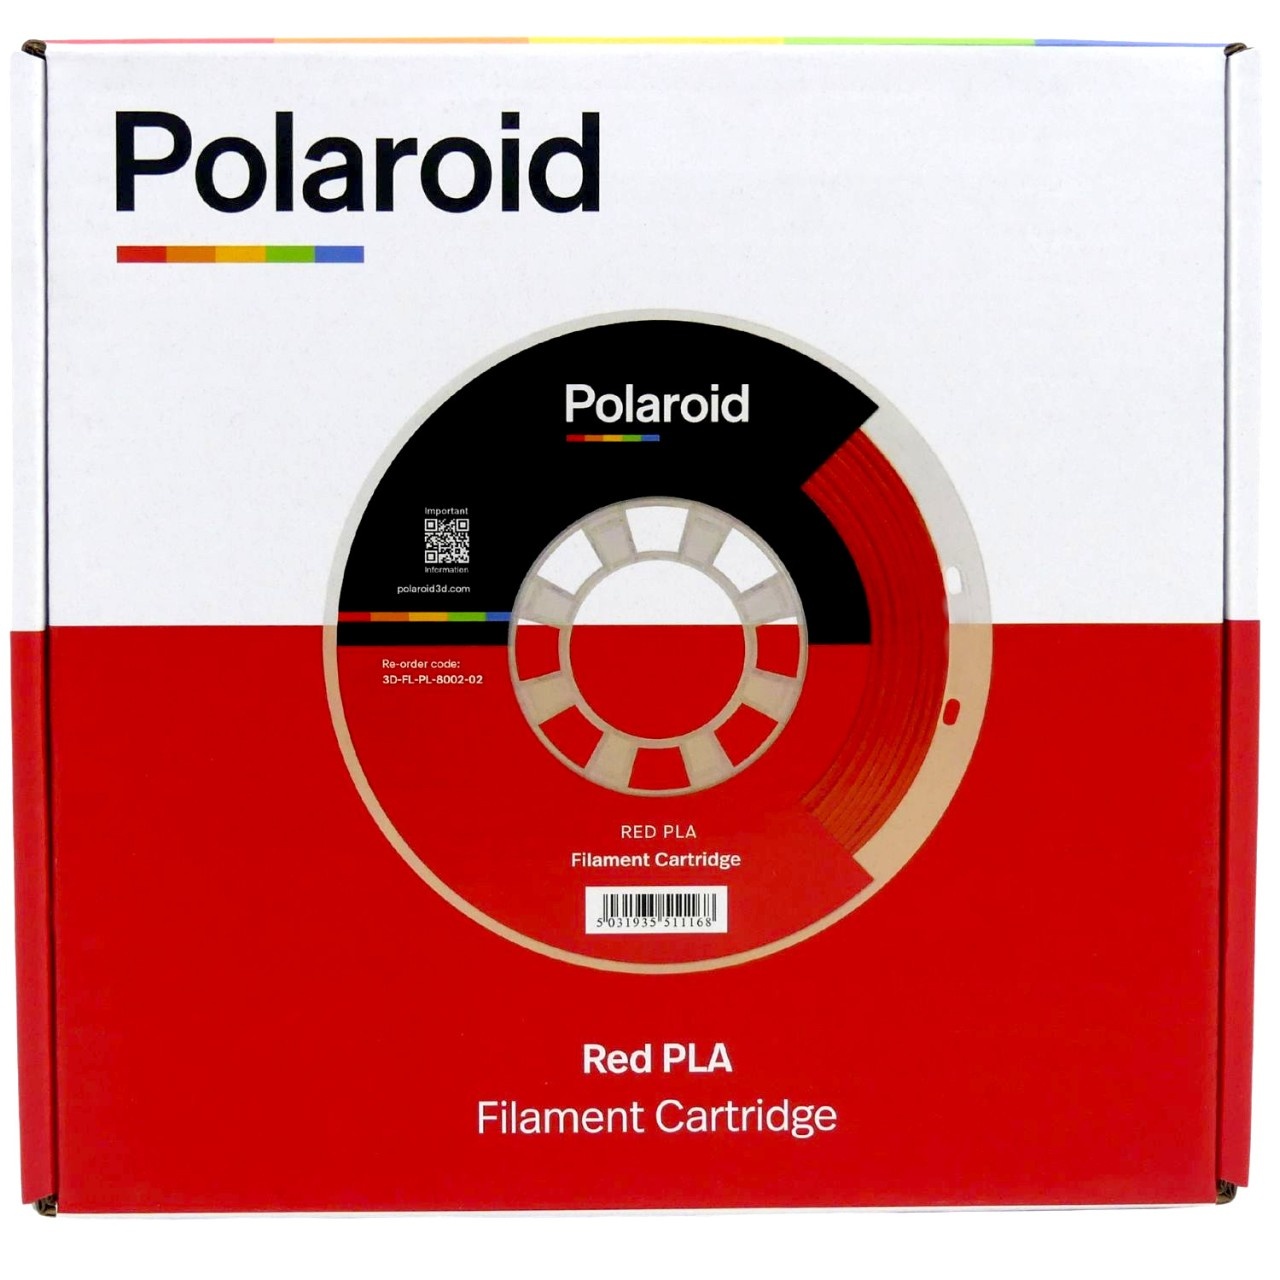 Polaroid Filament Cartridge Red PLA 3D-FL-PL-8002-02 Filamentpatrone Filament...